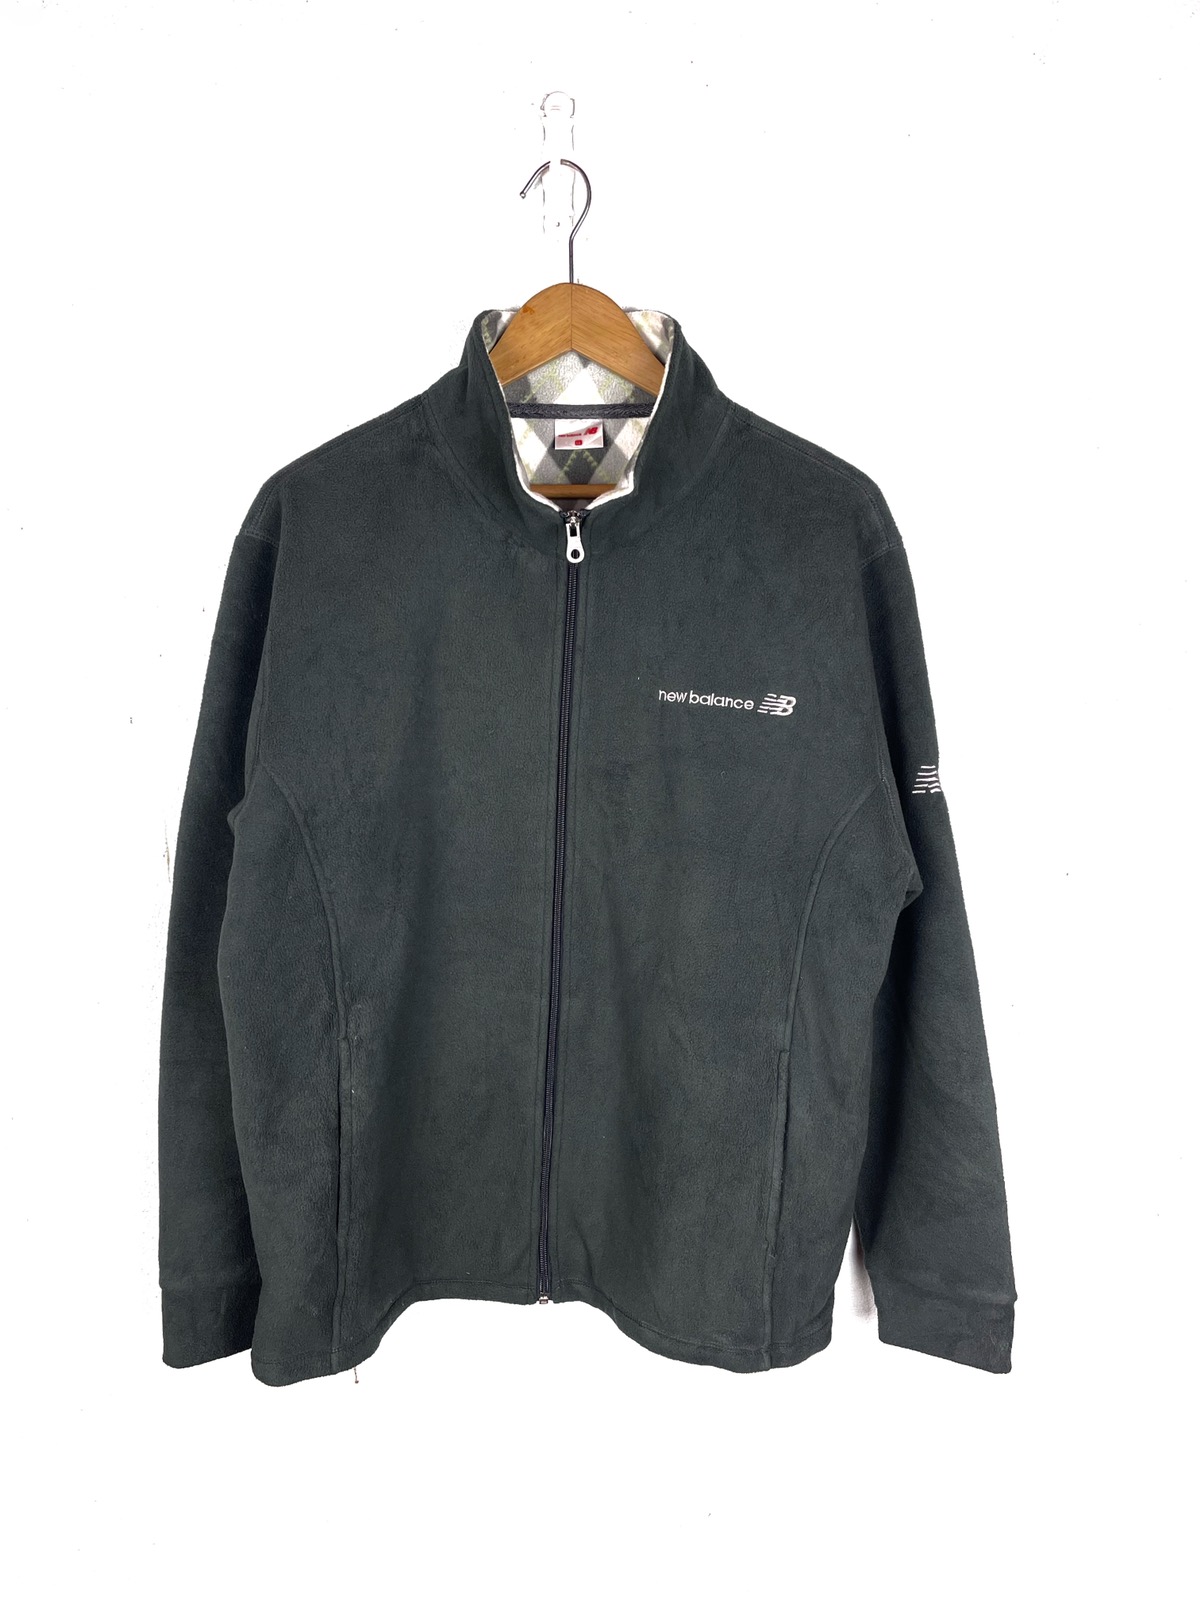 New Balance fleece zipper jacket - 5